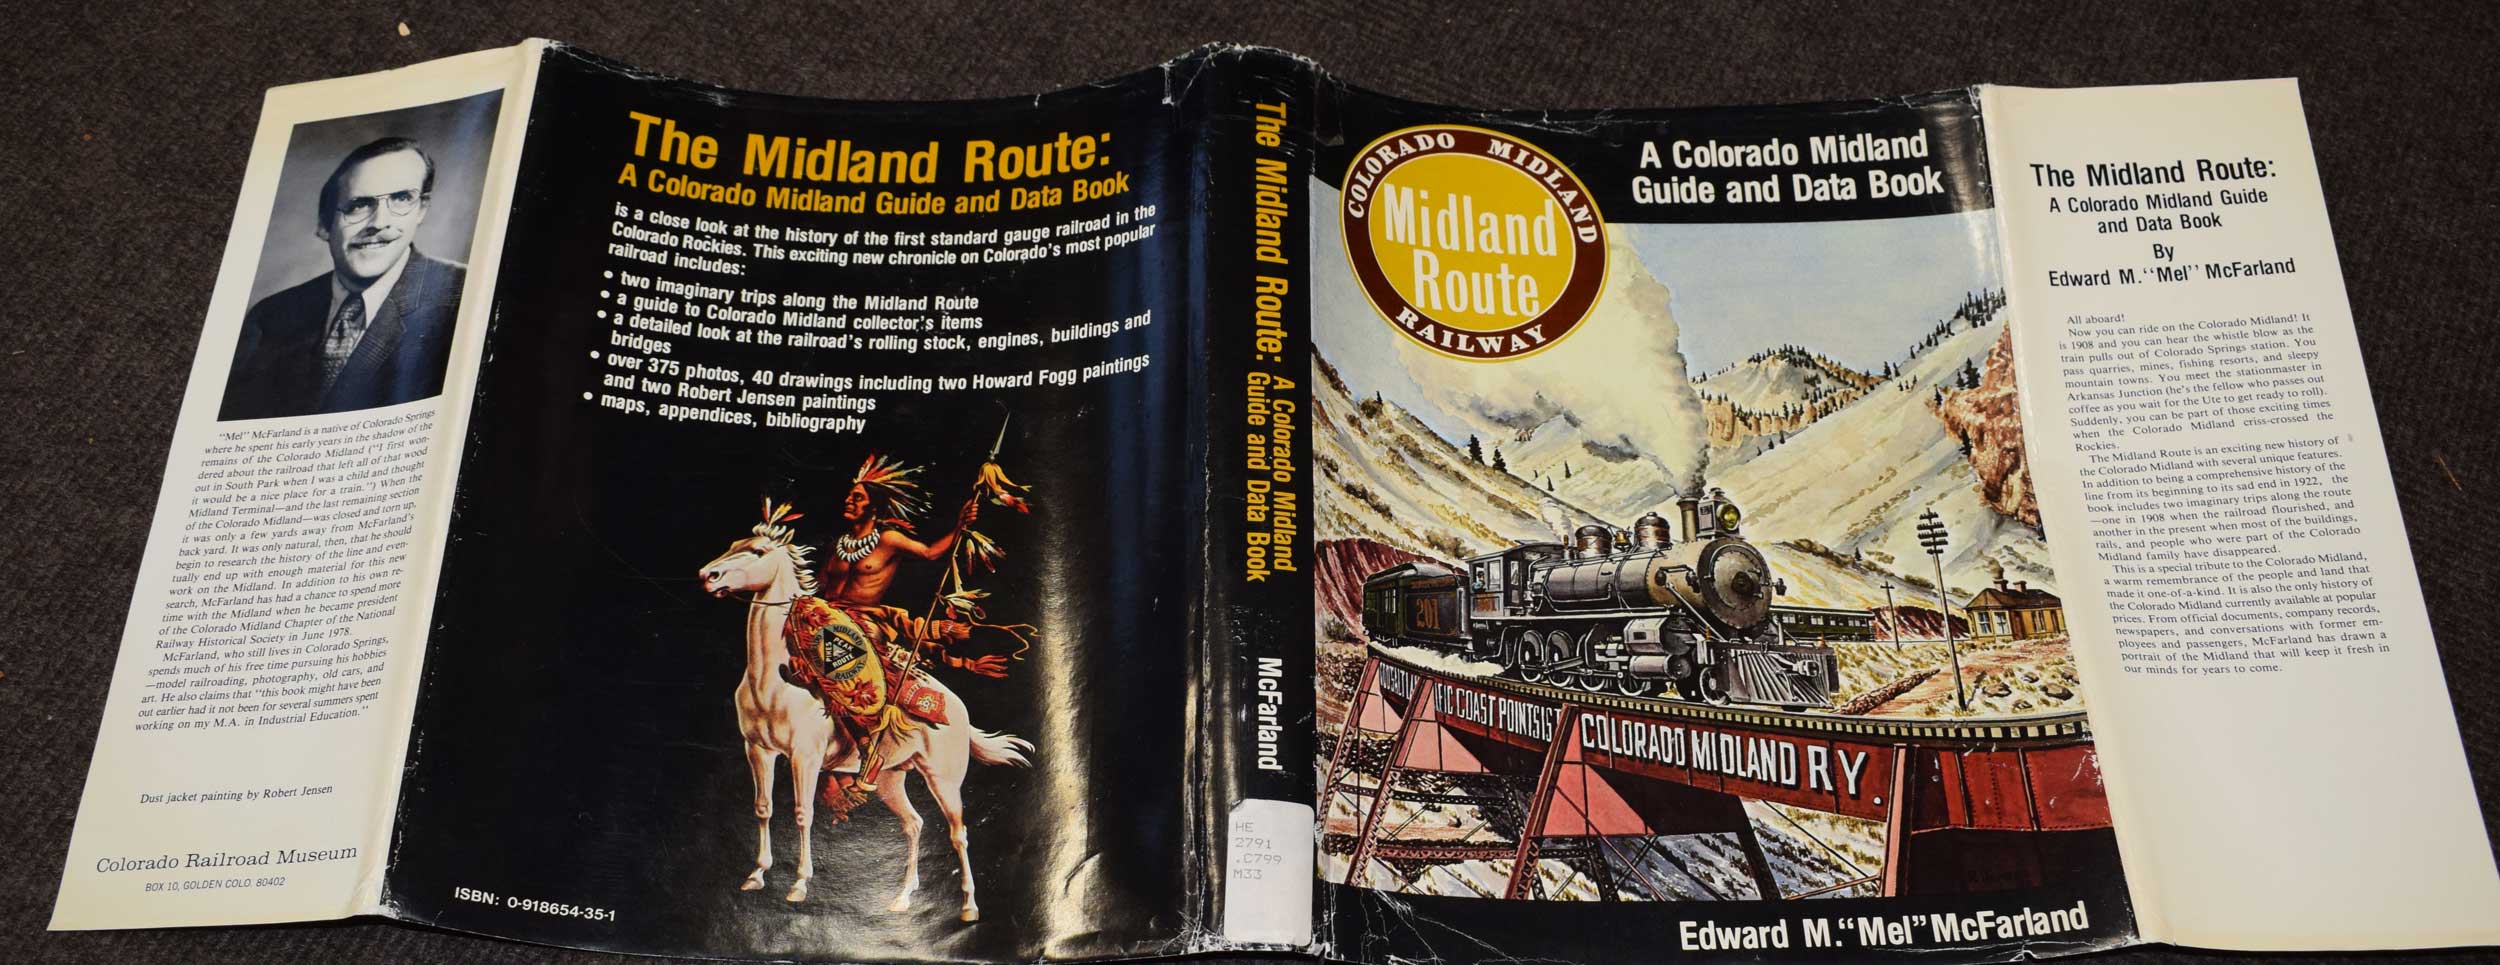 The Midland Route. Colorado Midland Railway.